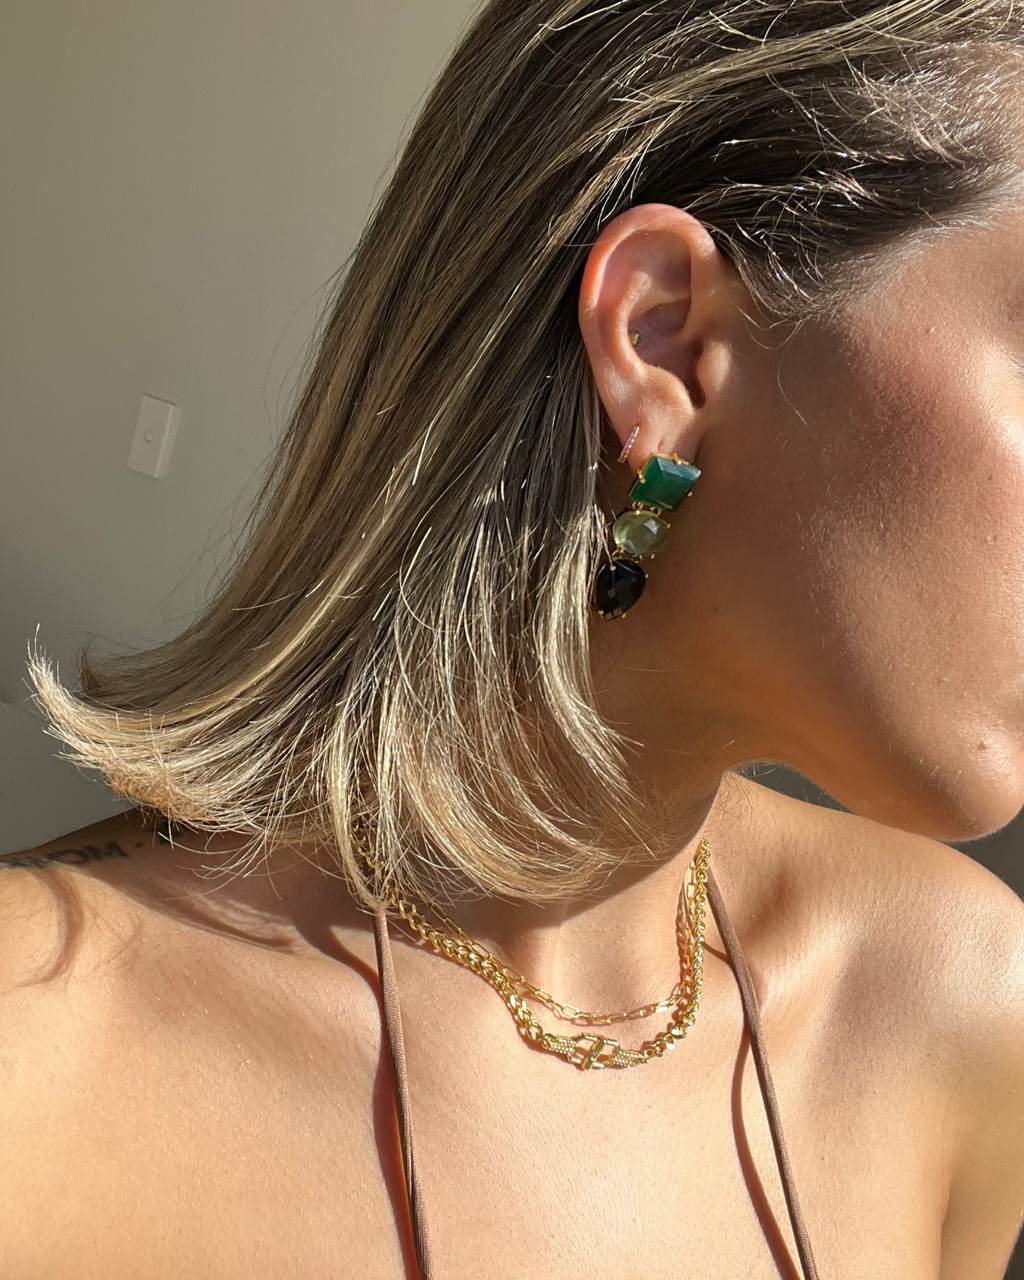 Izoa Rylee Earrings Gold Green Black